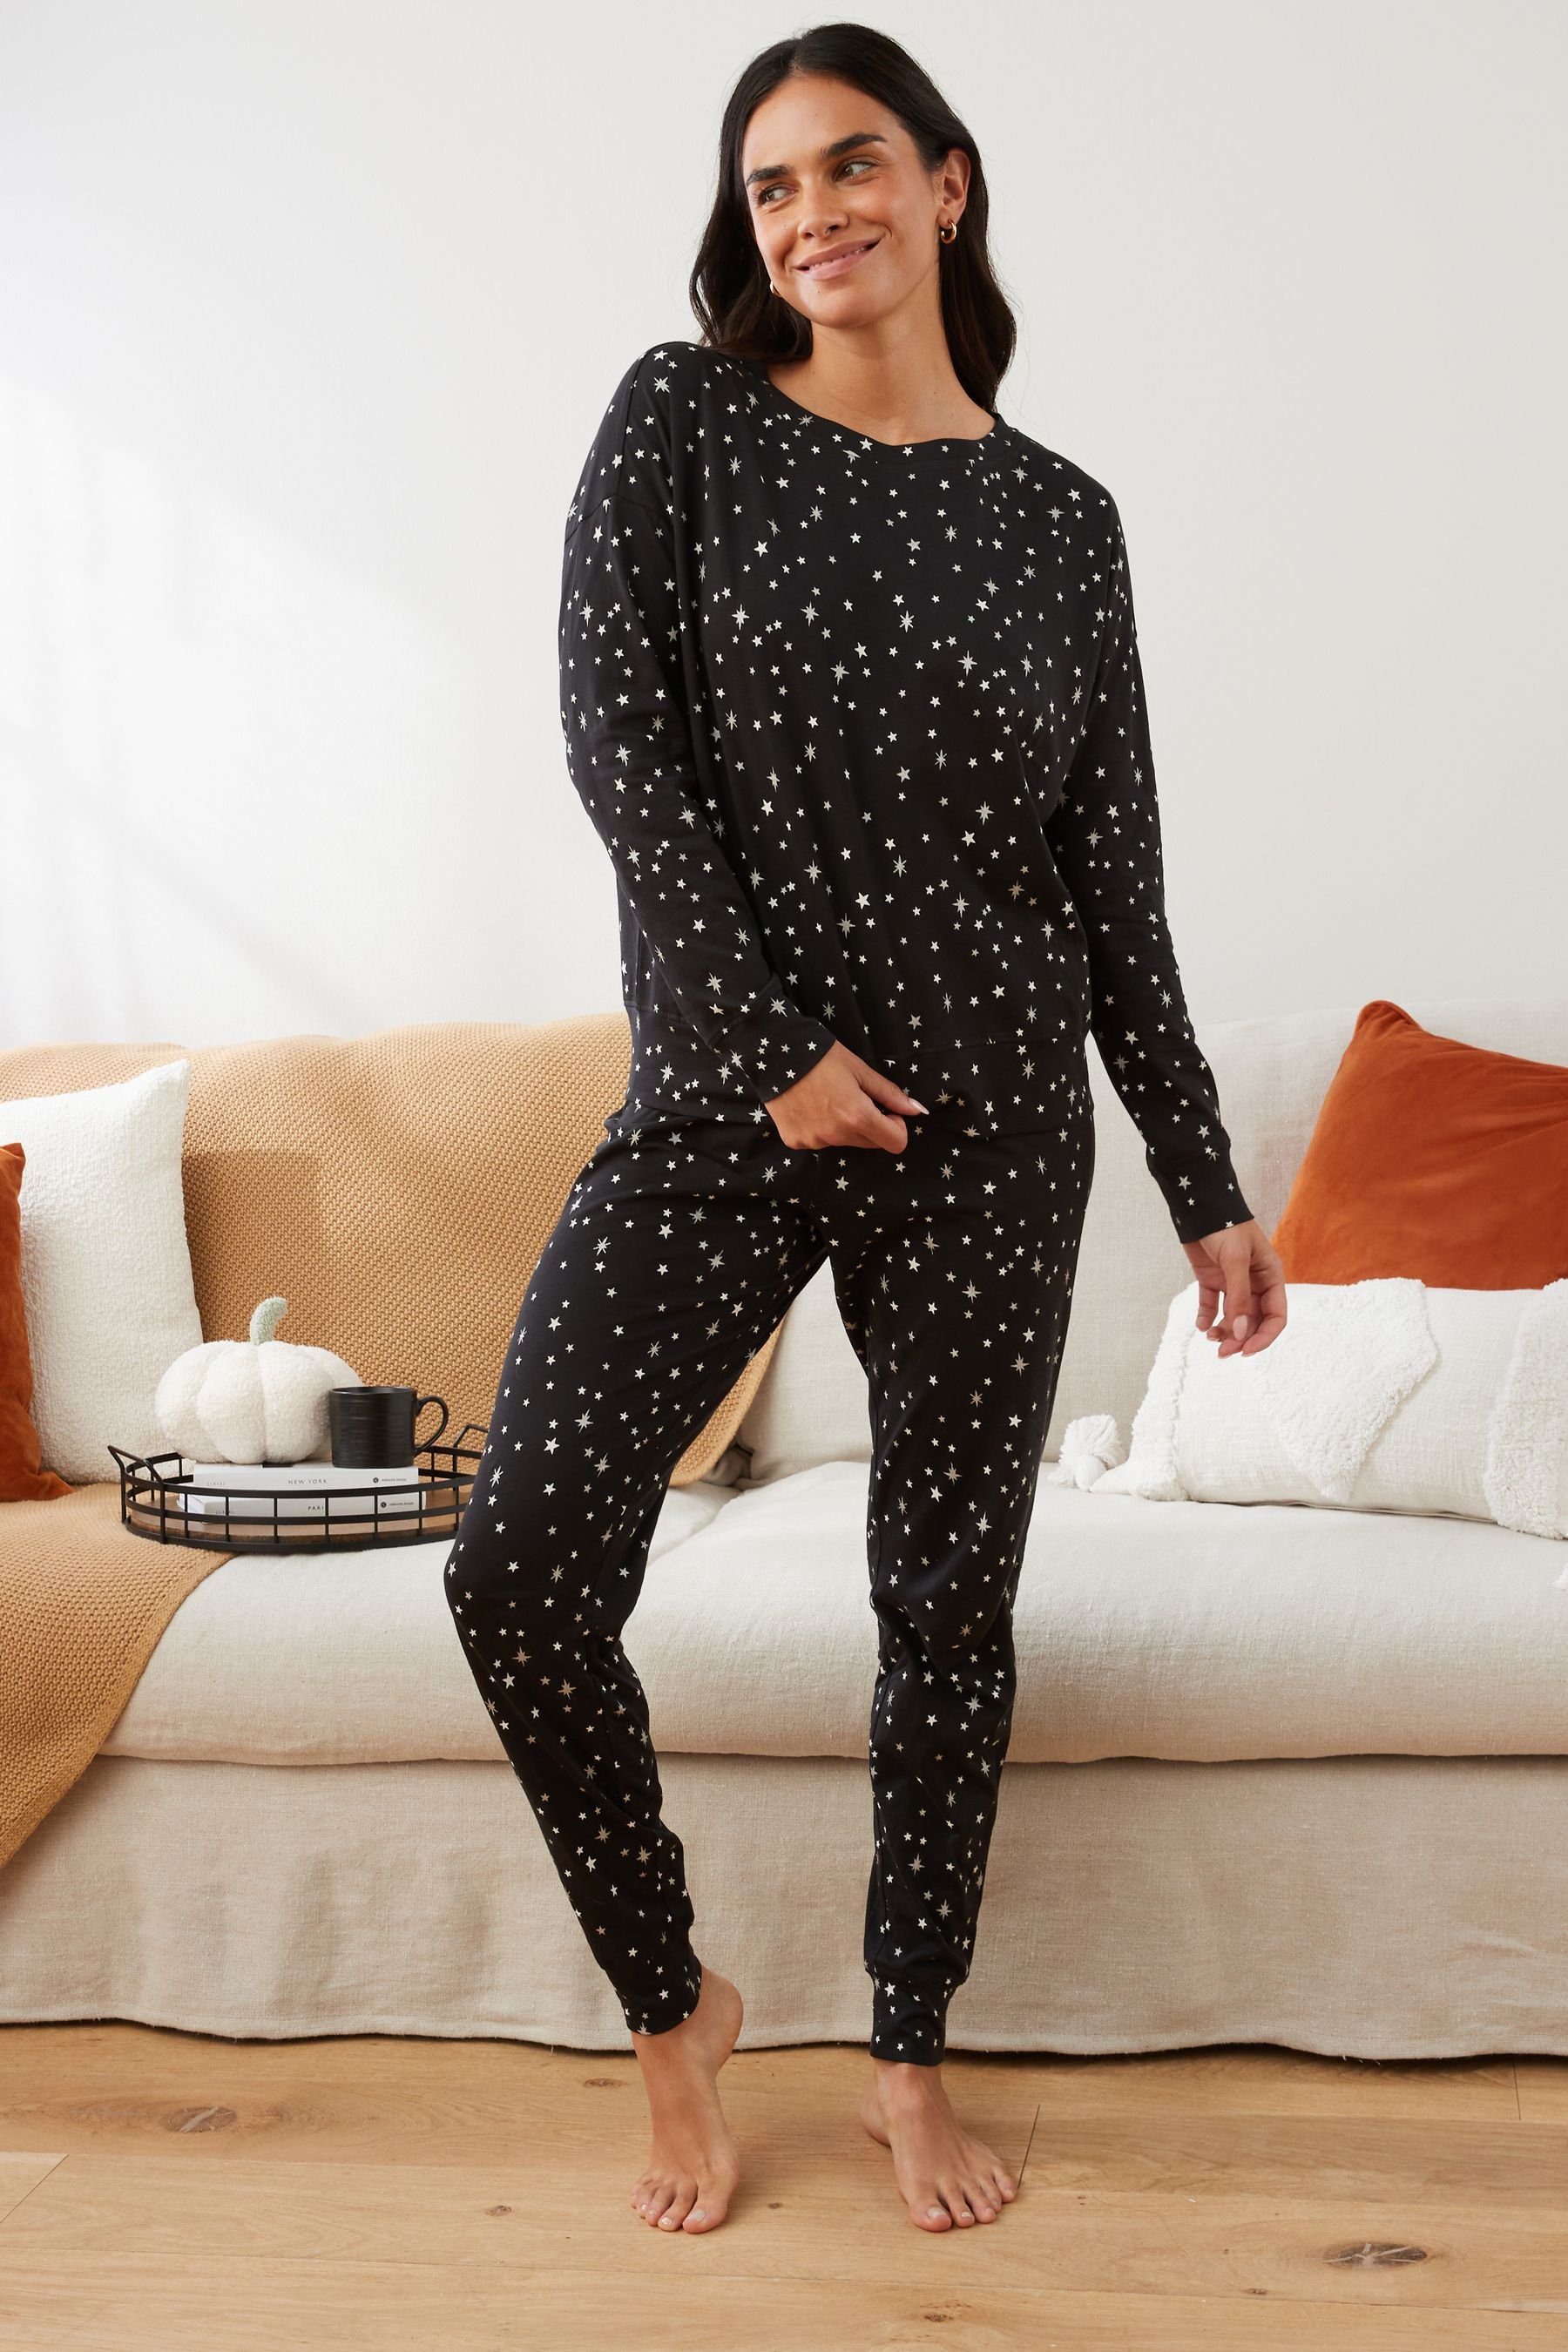 tlg) Langärmeliger Pyjama Black Pyjama Star (2 Baumwolle Next aus